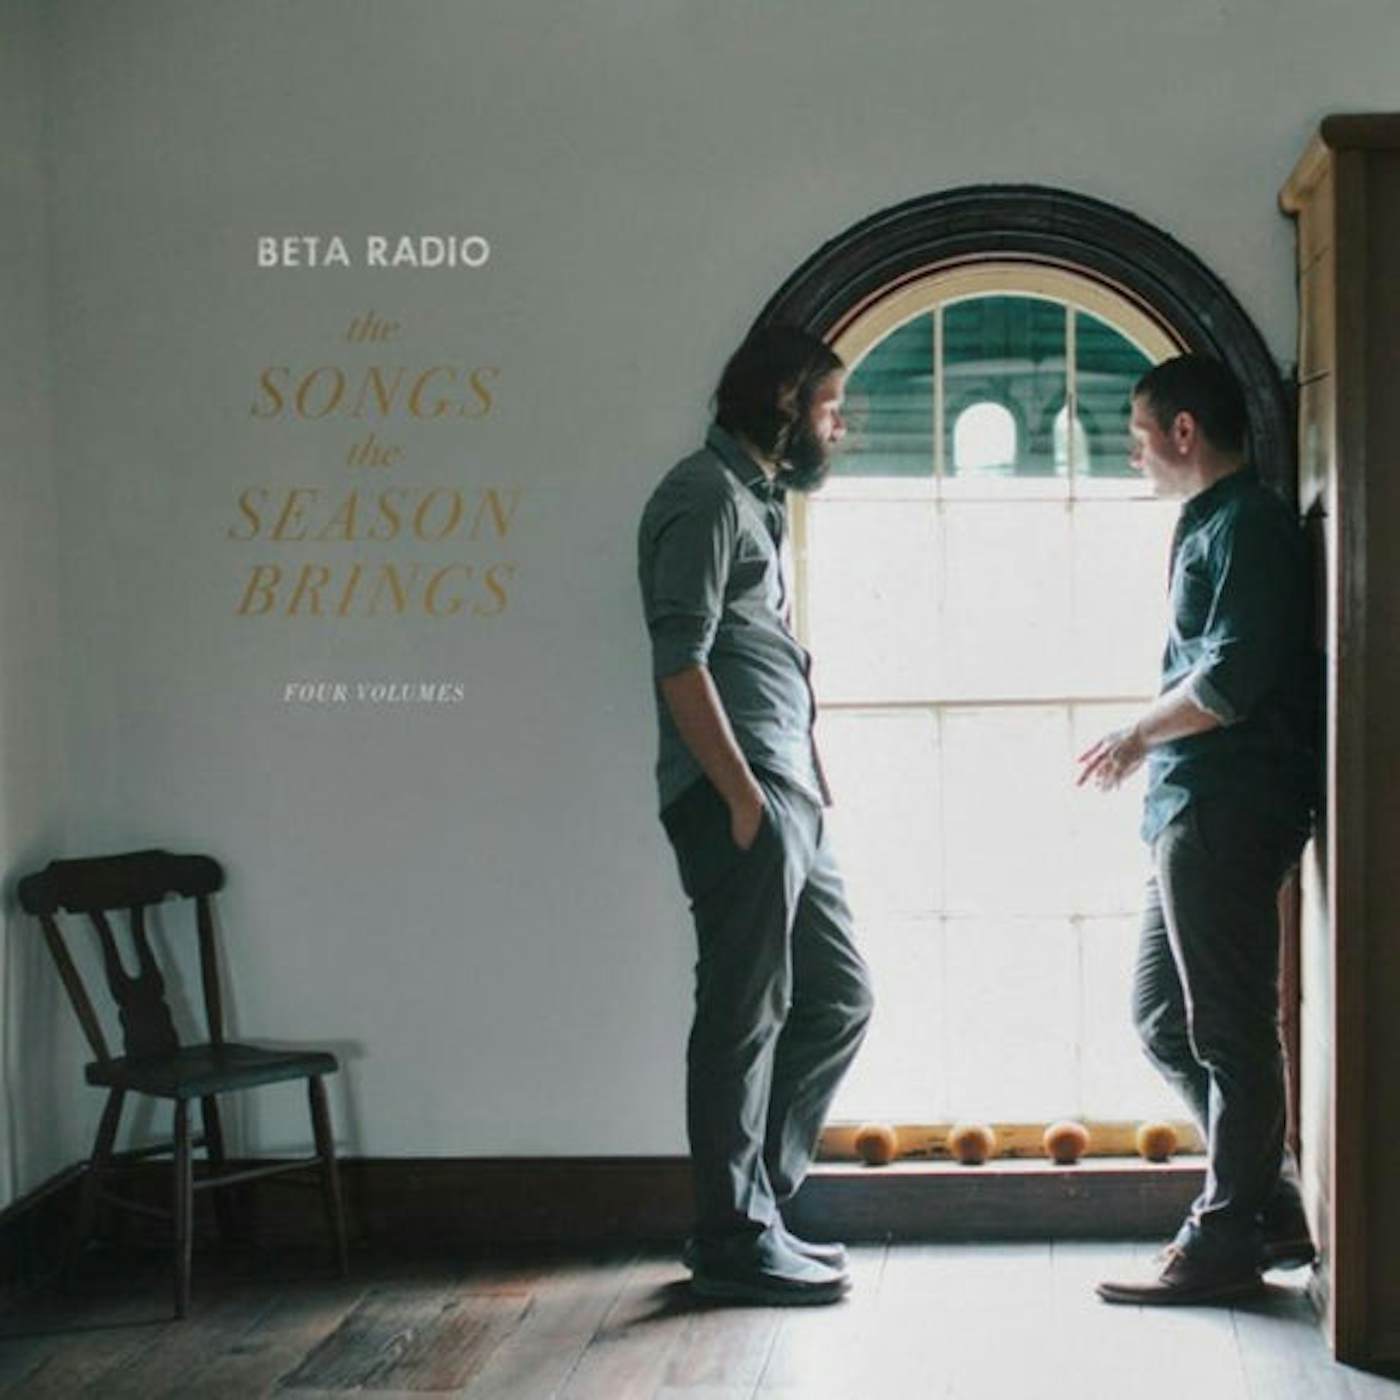 Beta Radio SONGS THE SEASON BRINGS VOLS 1-4 Vinyl Record